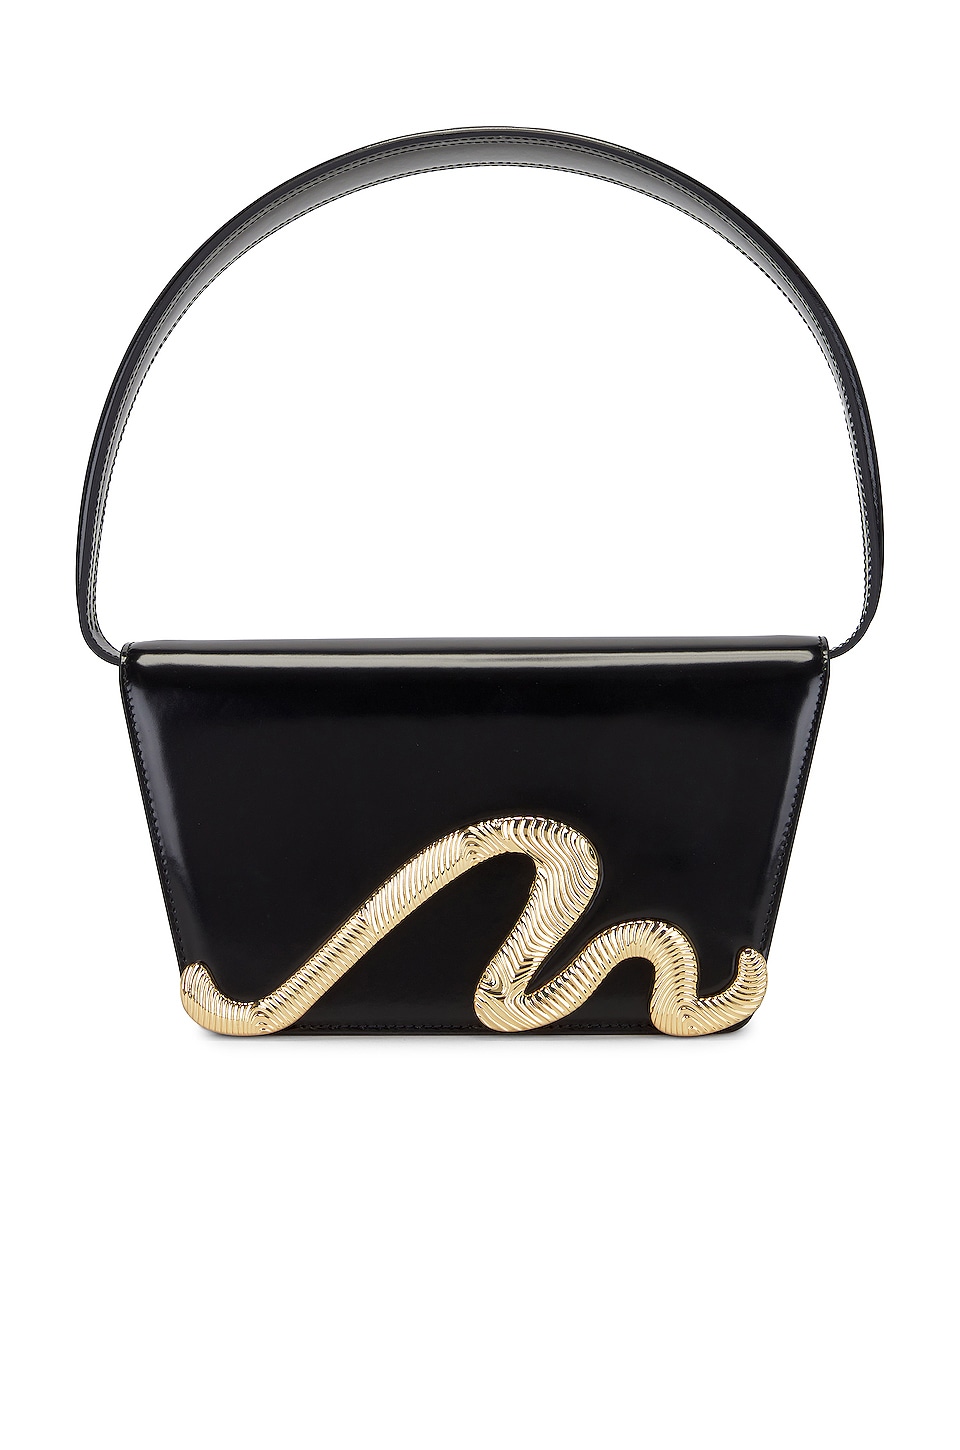 Black Belay Baguette Bag by ZAC Zac Posen Handbags for $20